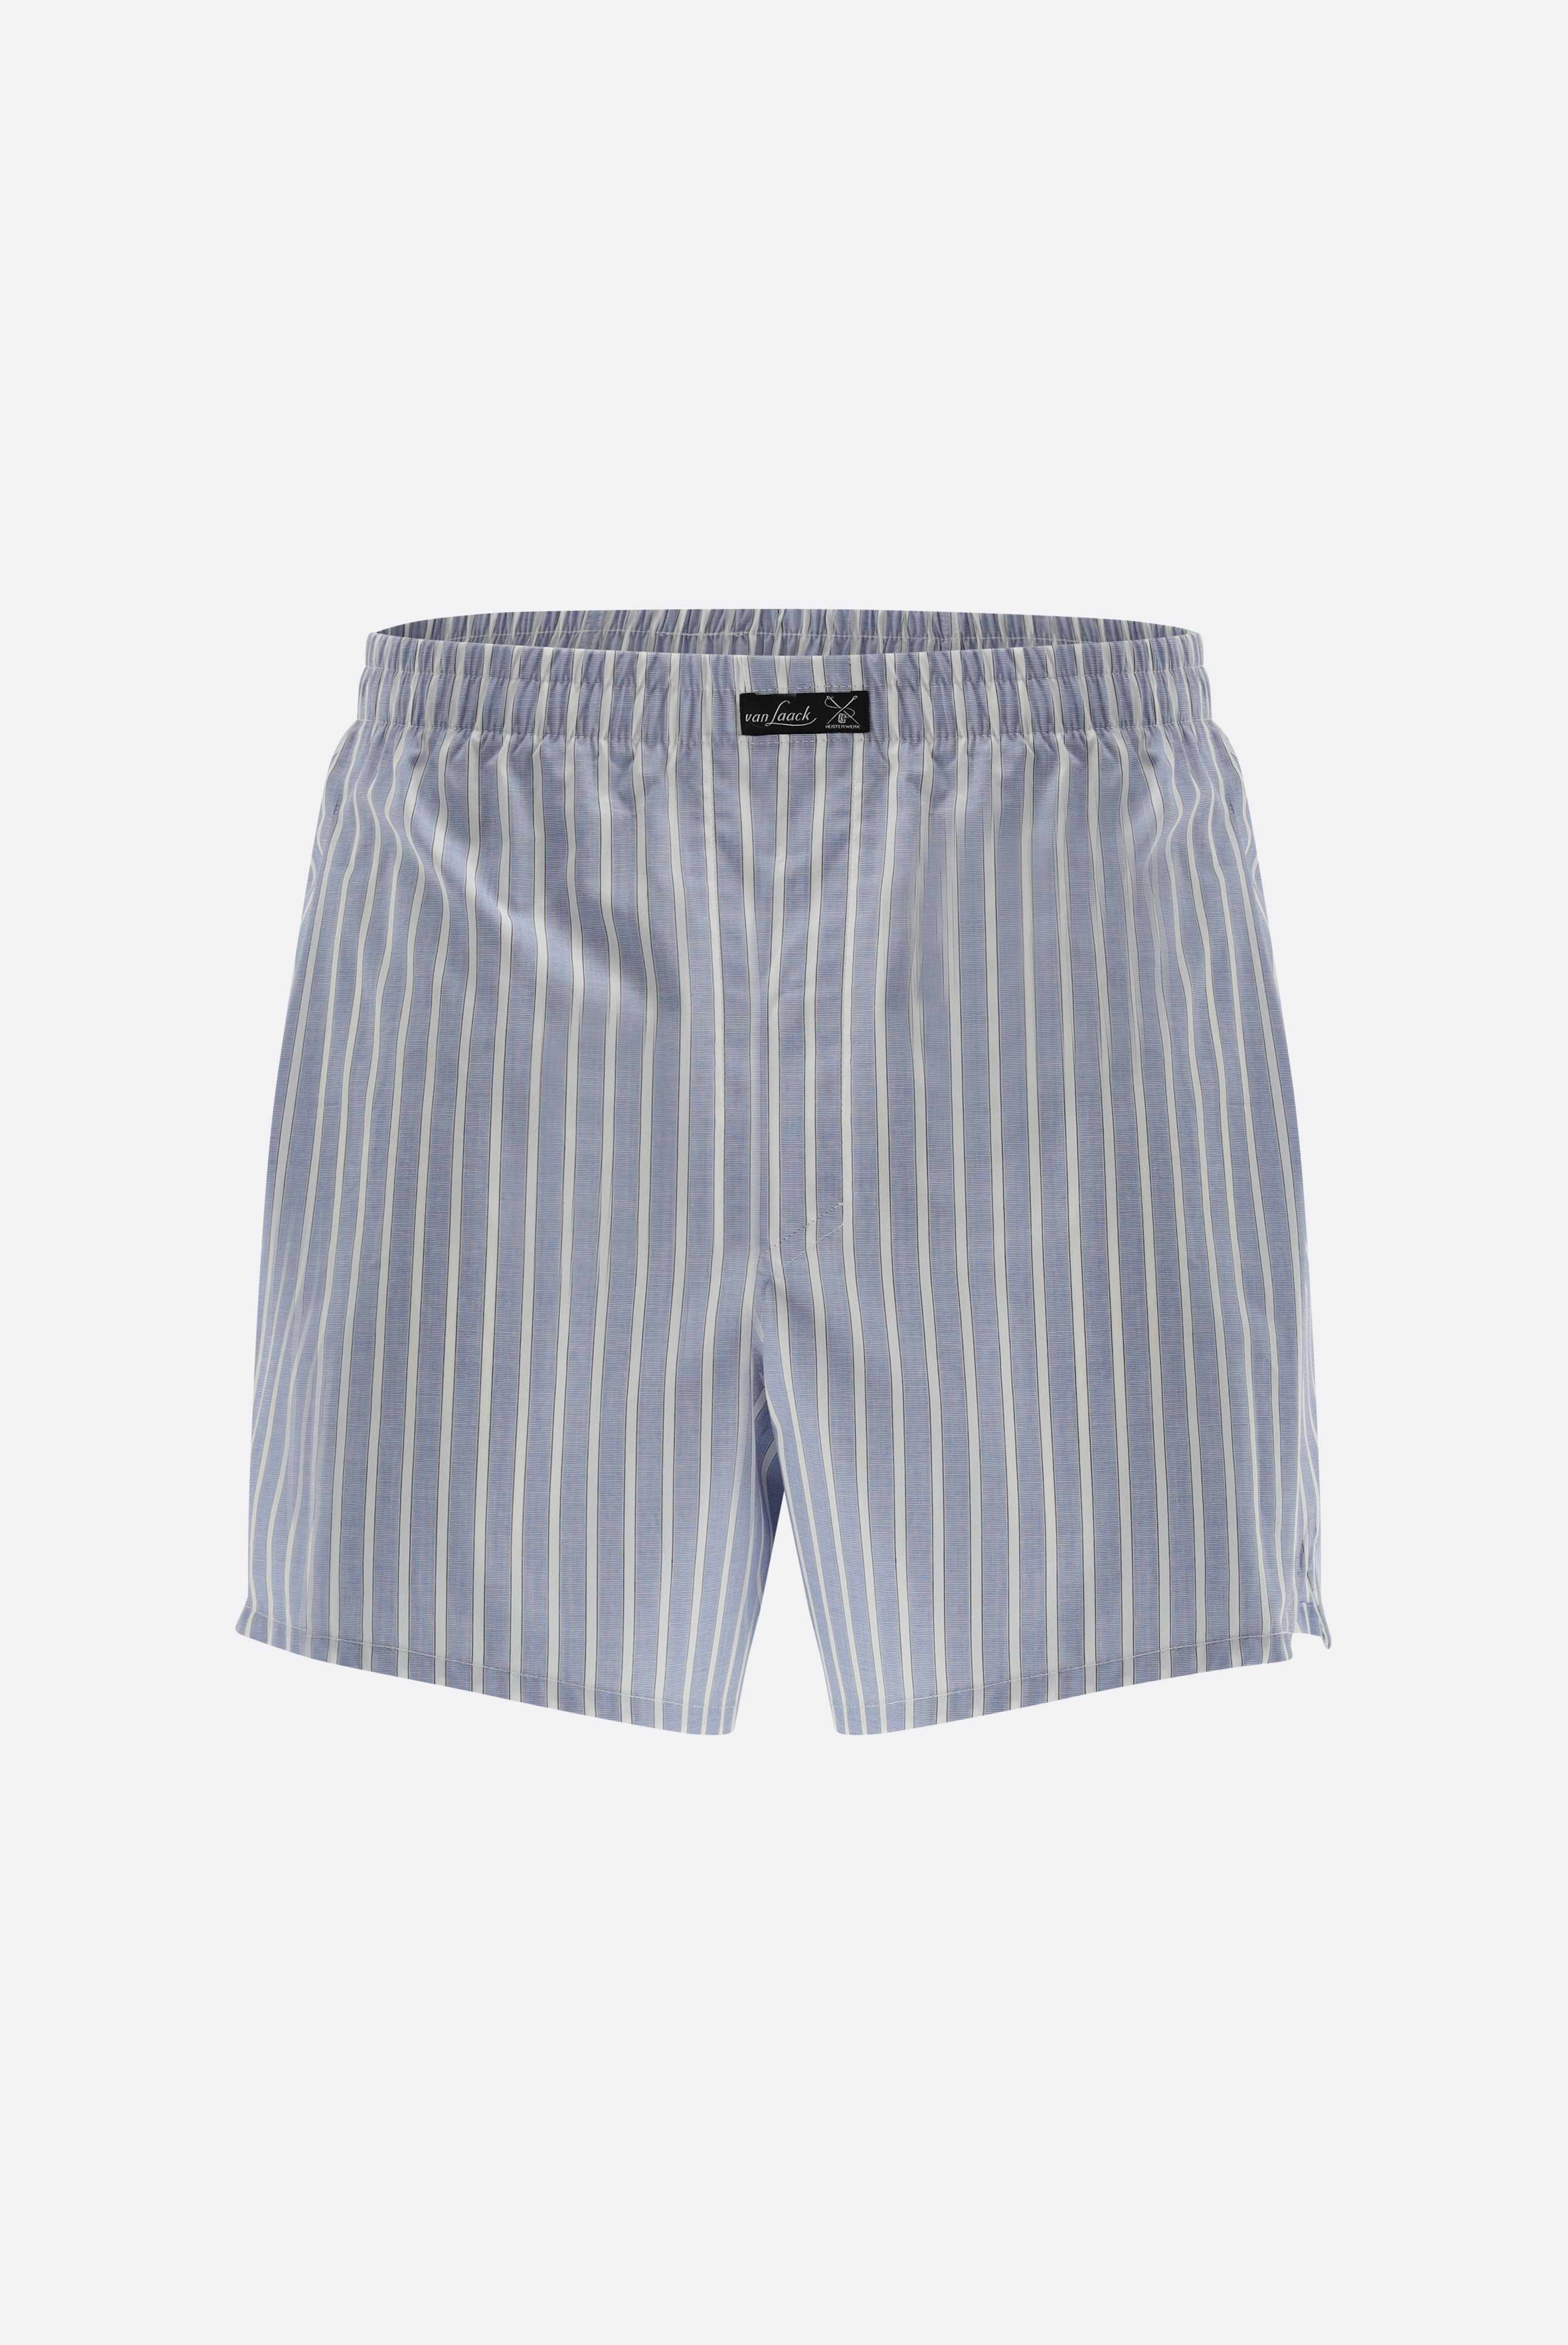 Underwear+Striped Poplin Boxer Shorts+91.1100..168016.740.46